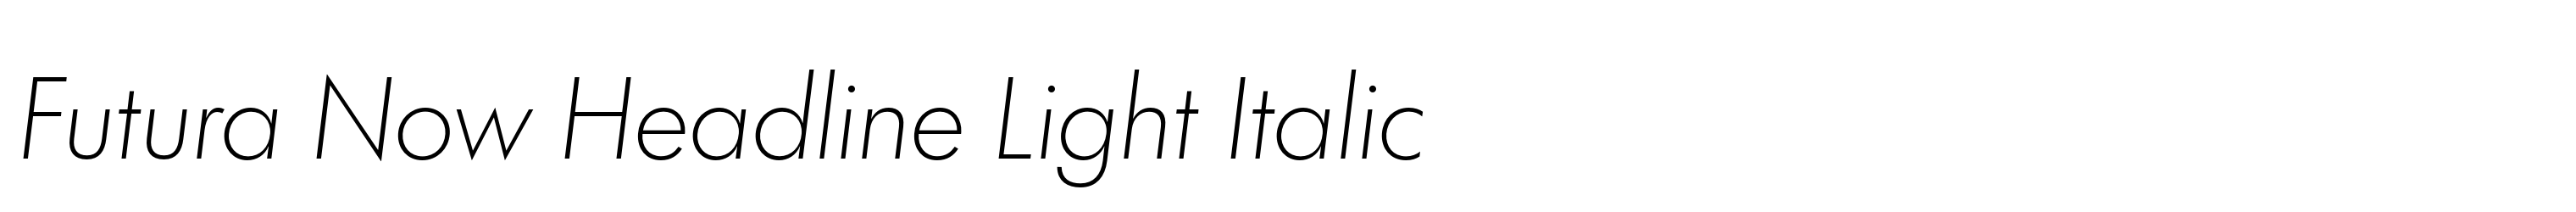 Futura Now Headline Light Italic